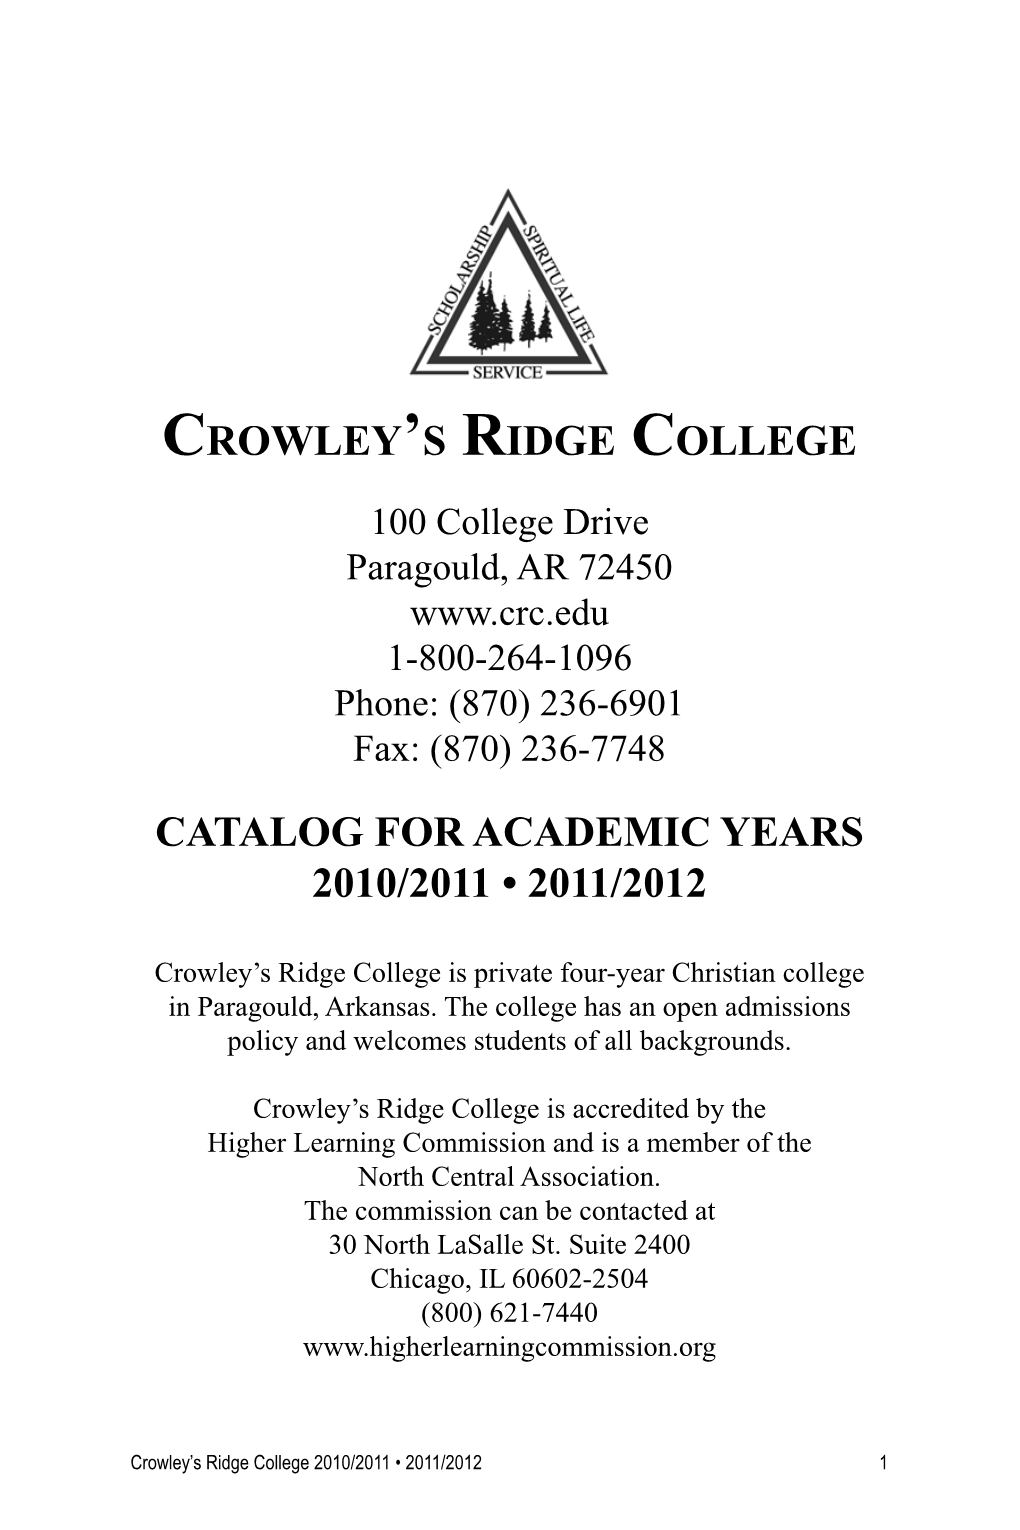 CROWLEY's RIDGE COLLEGE CATALOG for Academic Years